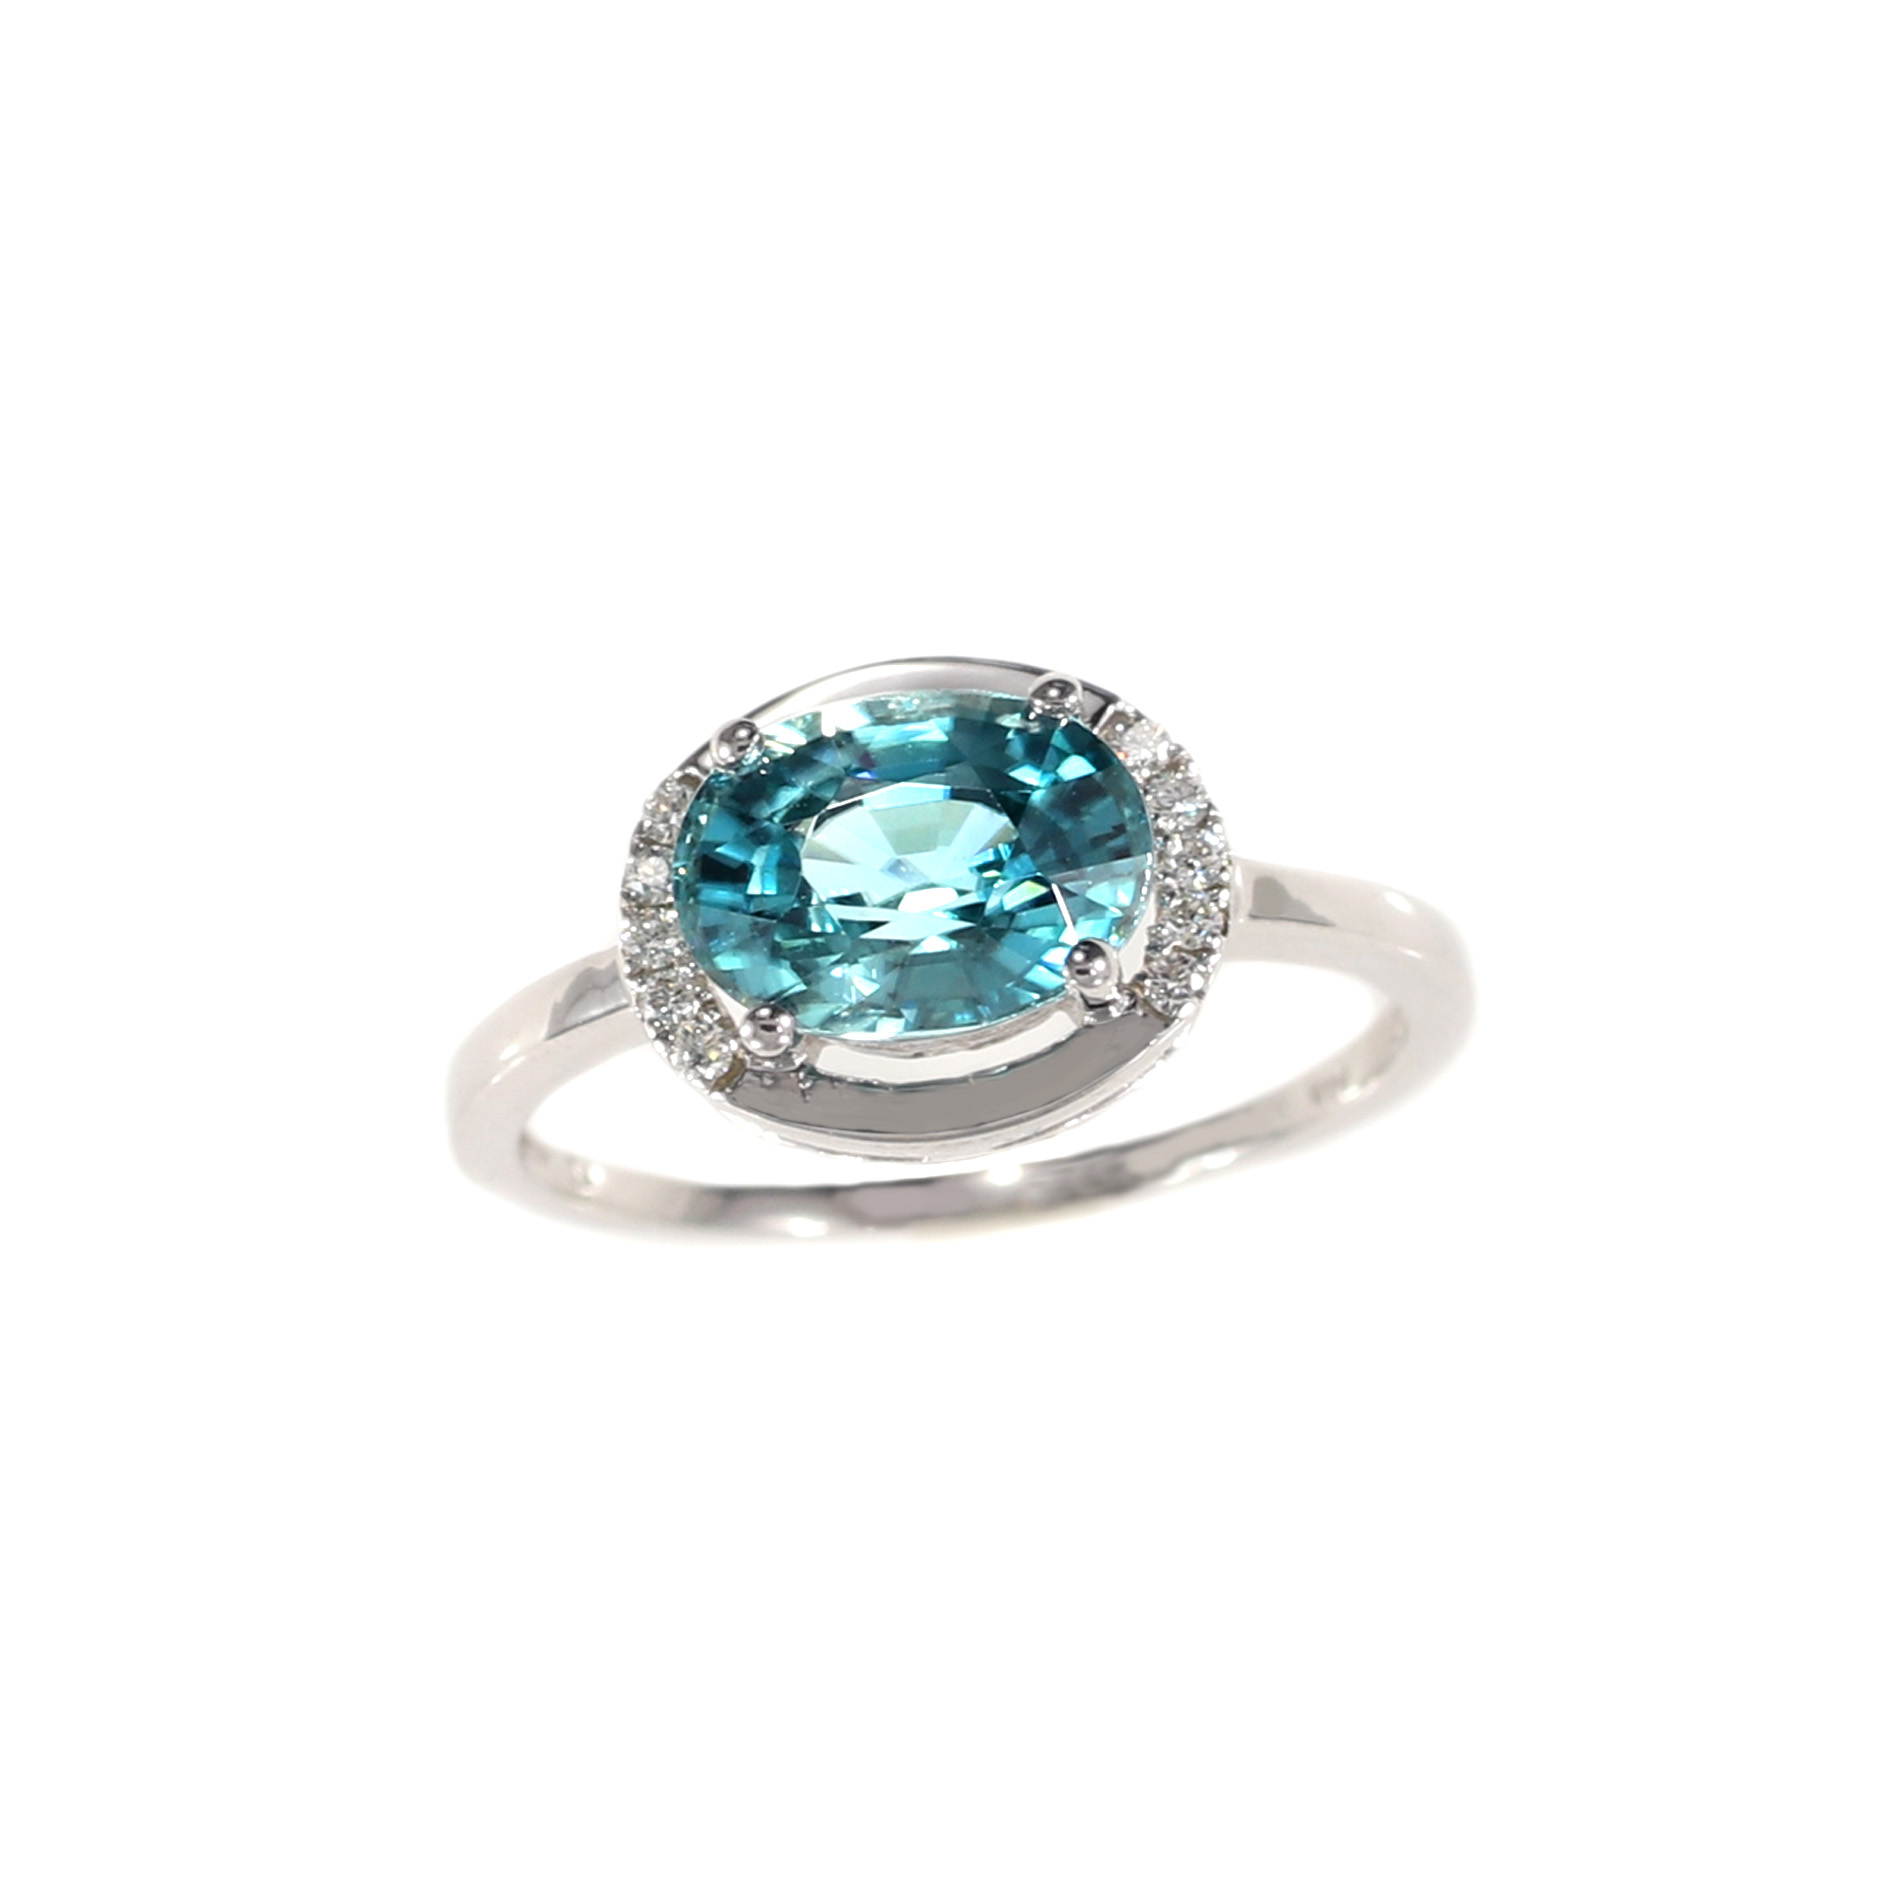 Tamara G Designs | East West Blue Zircon Ring